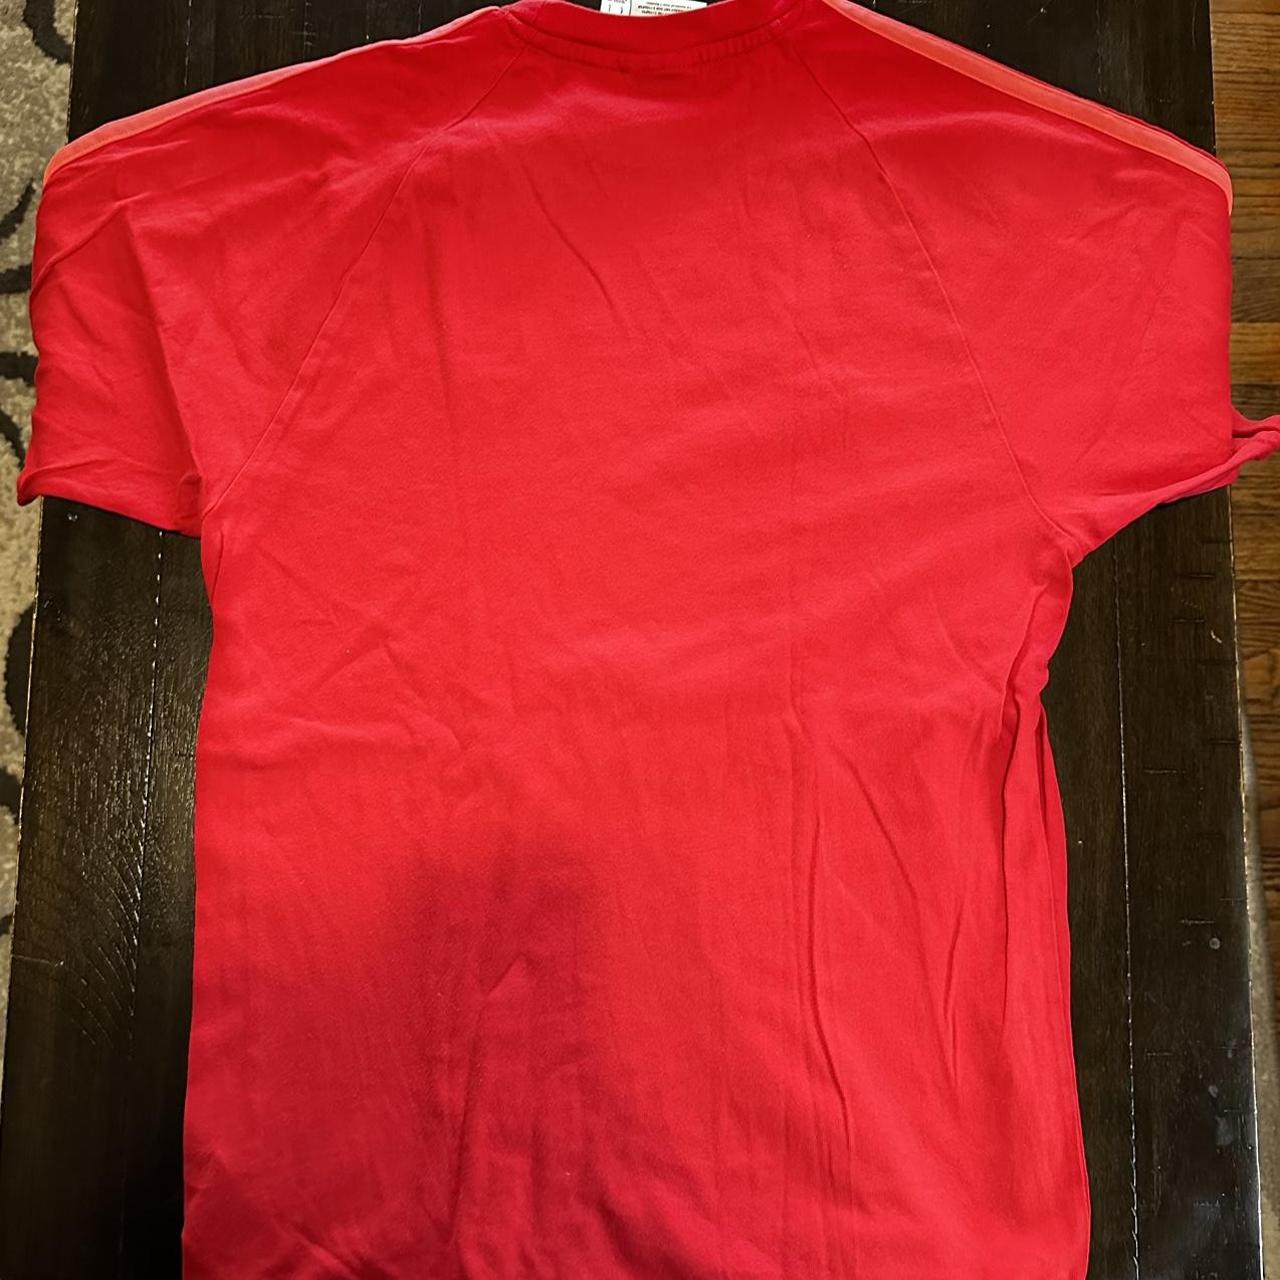 Adidas Originals Men's Red Shirt (2)